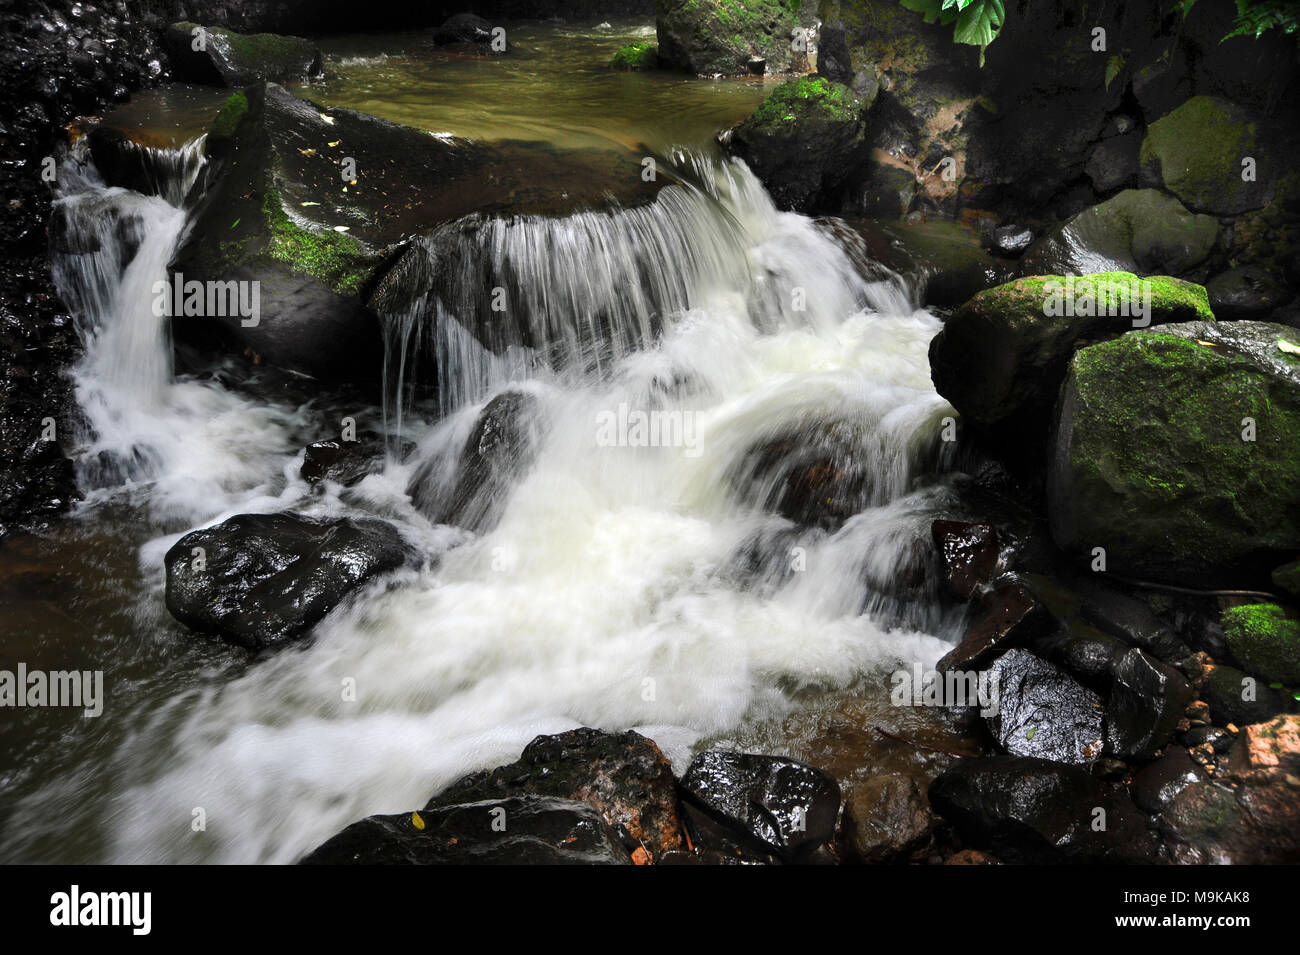 A small cascade flows below Hidden Waterfall at Viento Fresco in Costa Rica Stock Photo